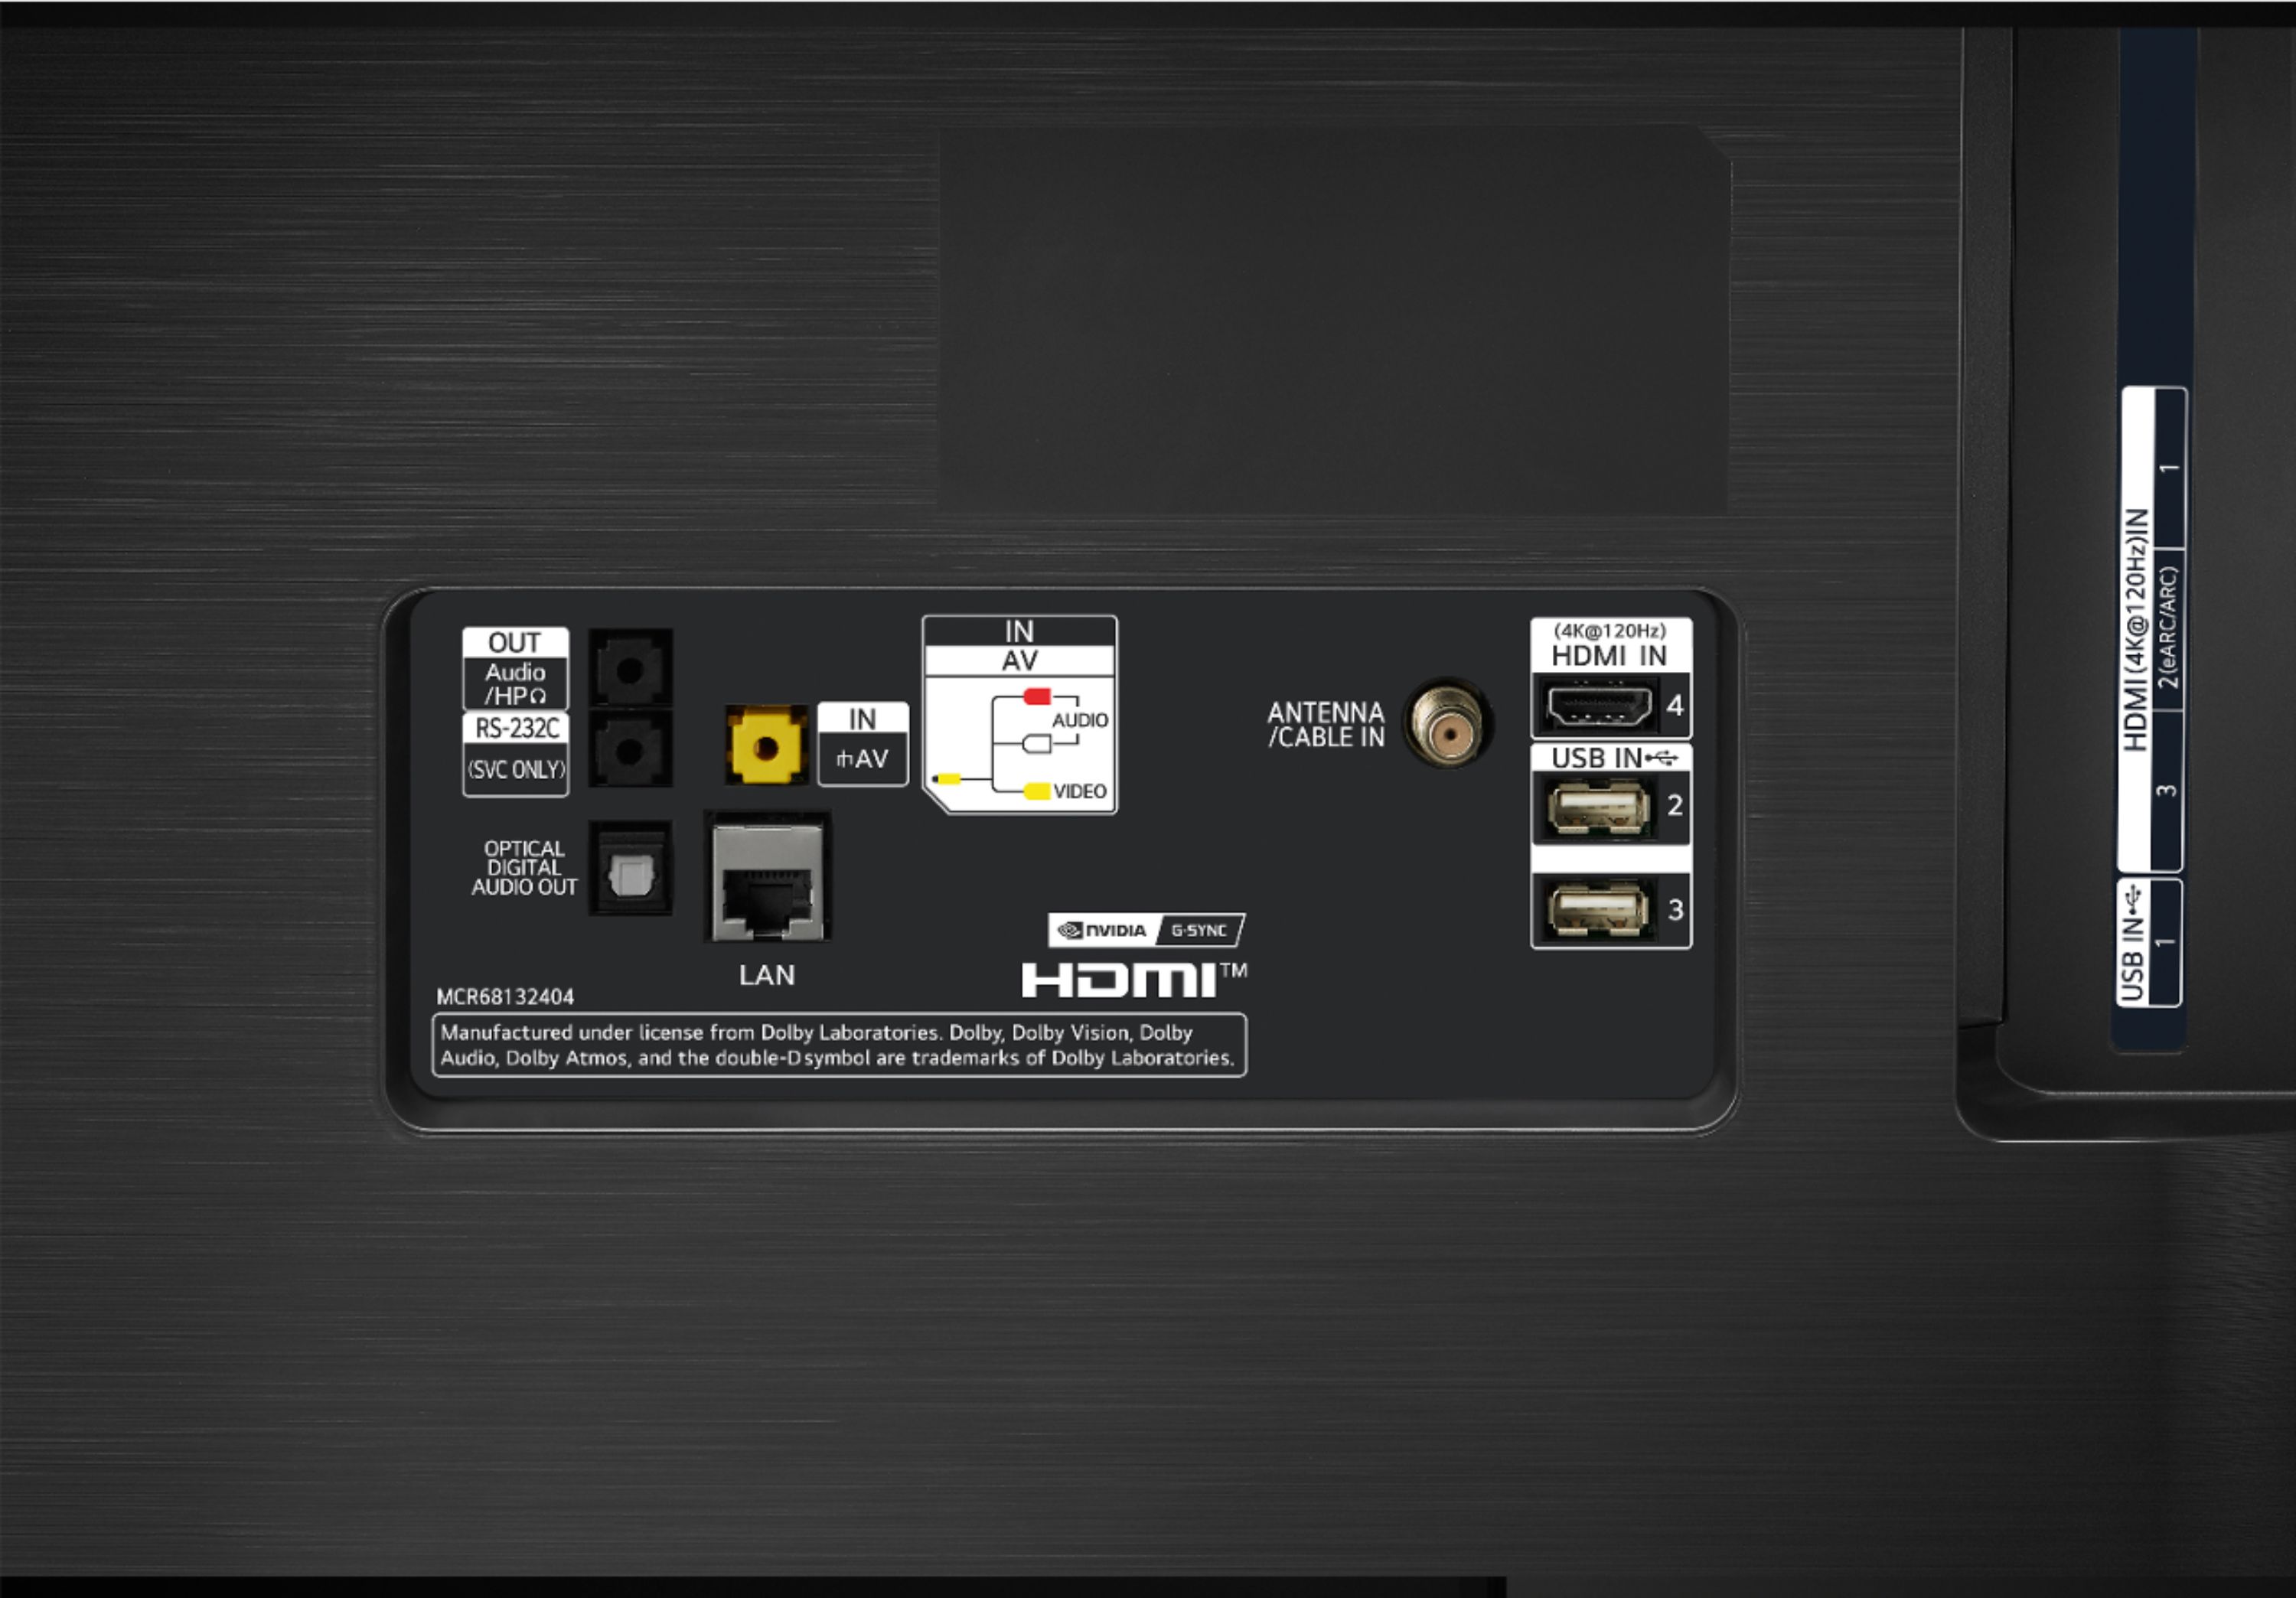 OLED TV LG 65″ MODELO OLED65CXPSA – Fulltec